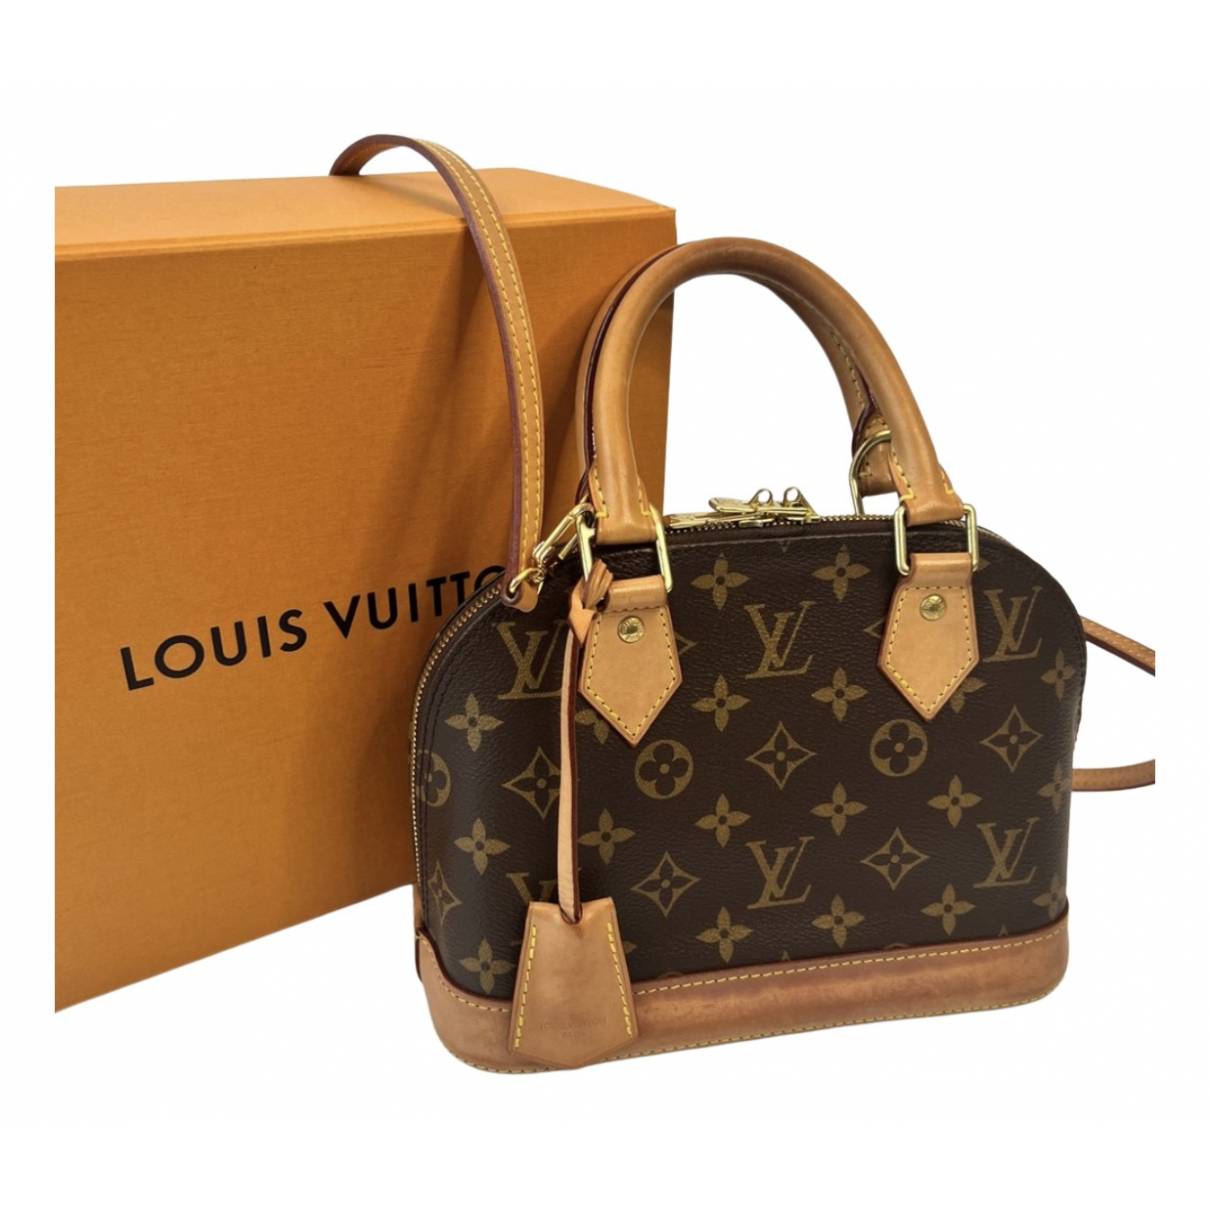 Alma bb leather handbag Louis Vuitton Brown in Leather - 27638792